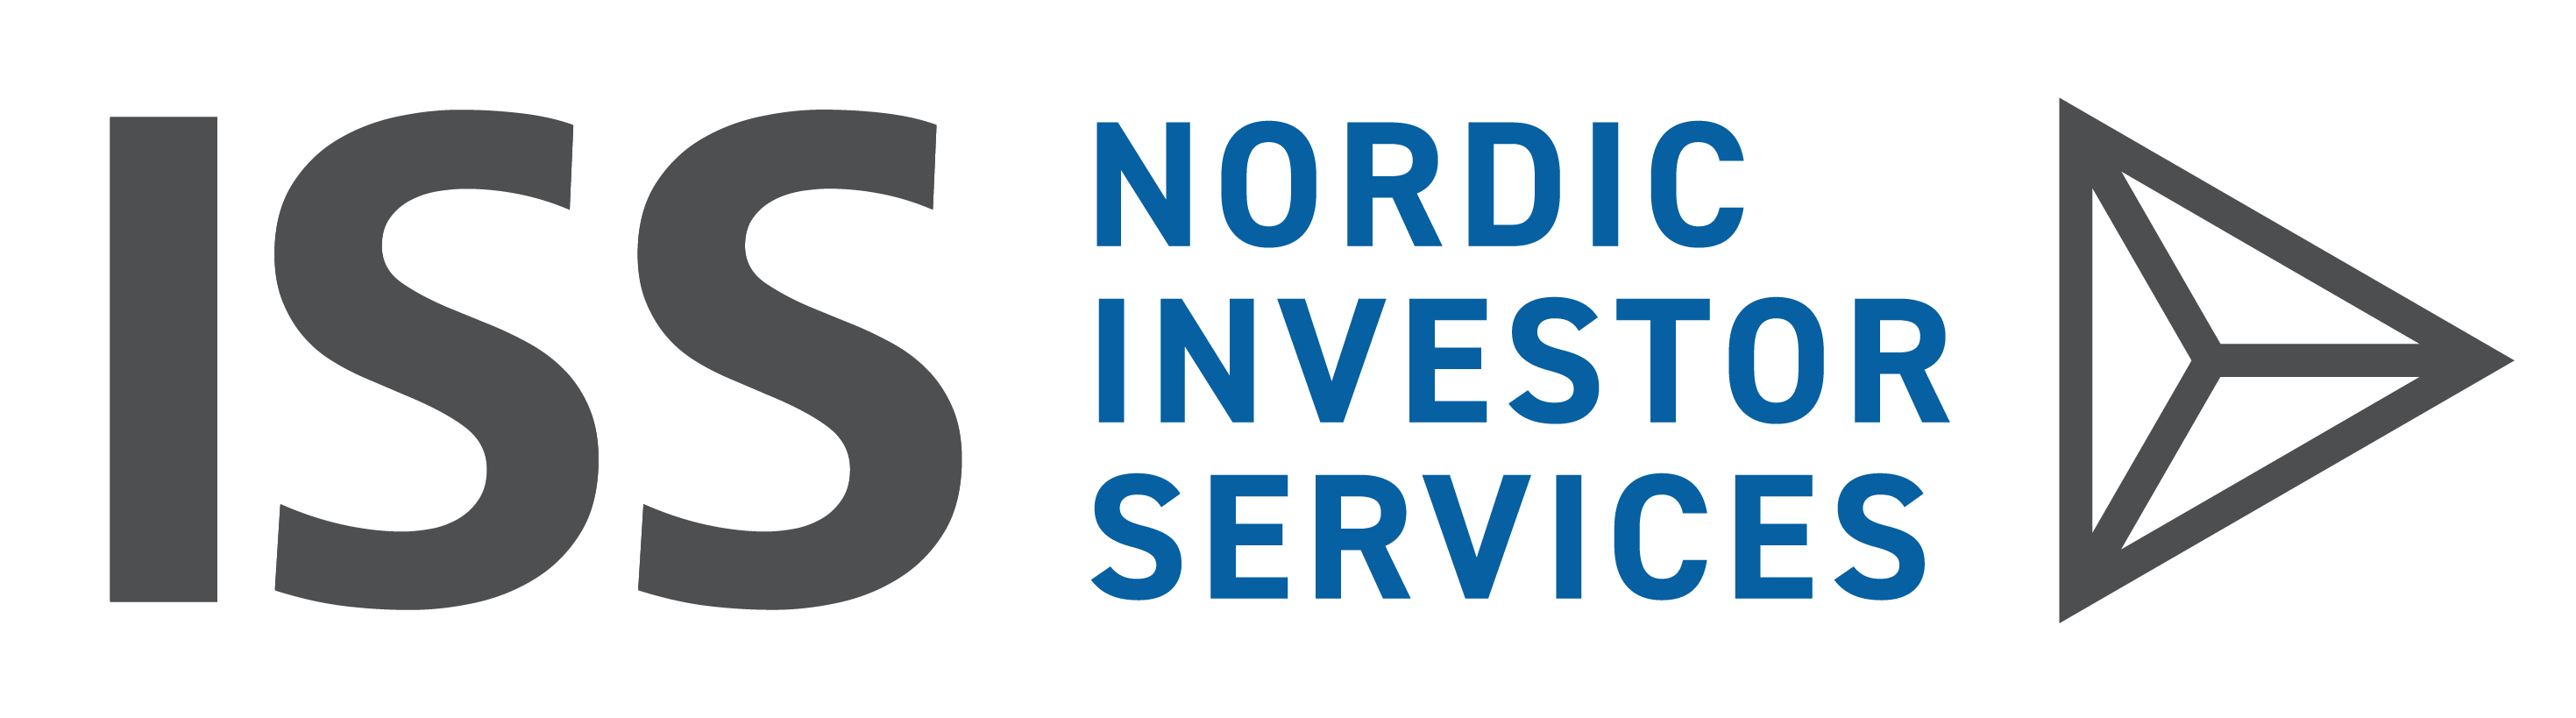 nordic-investor-services_rgb